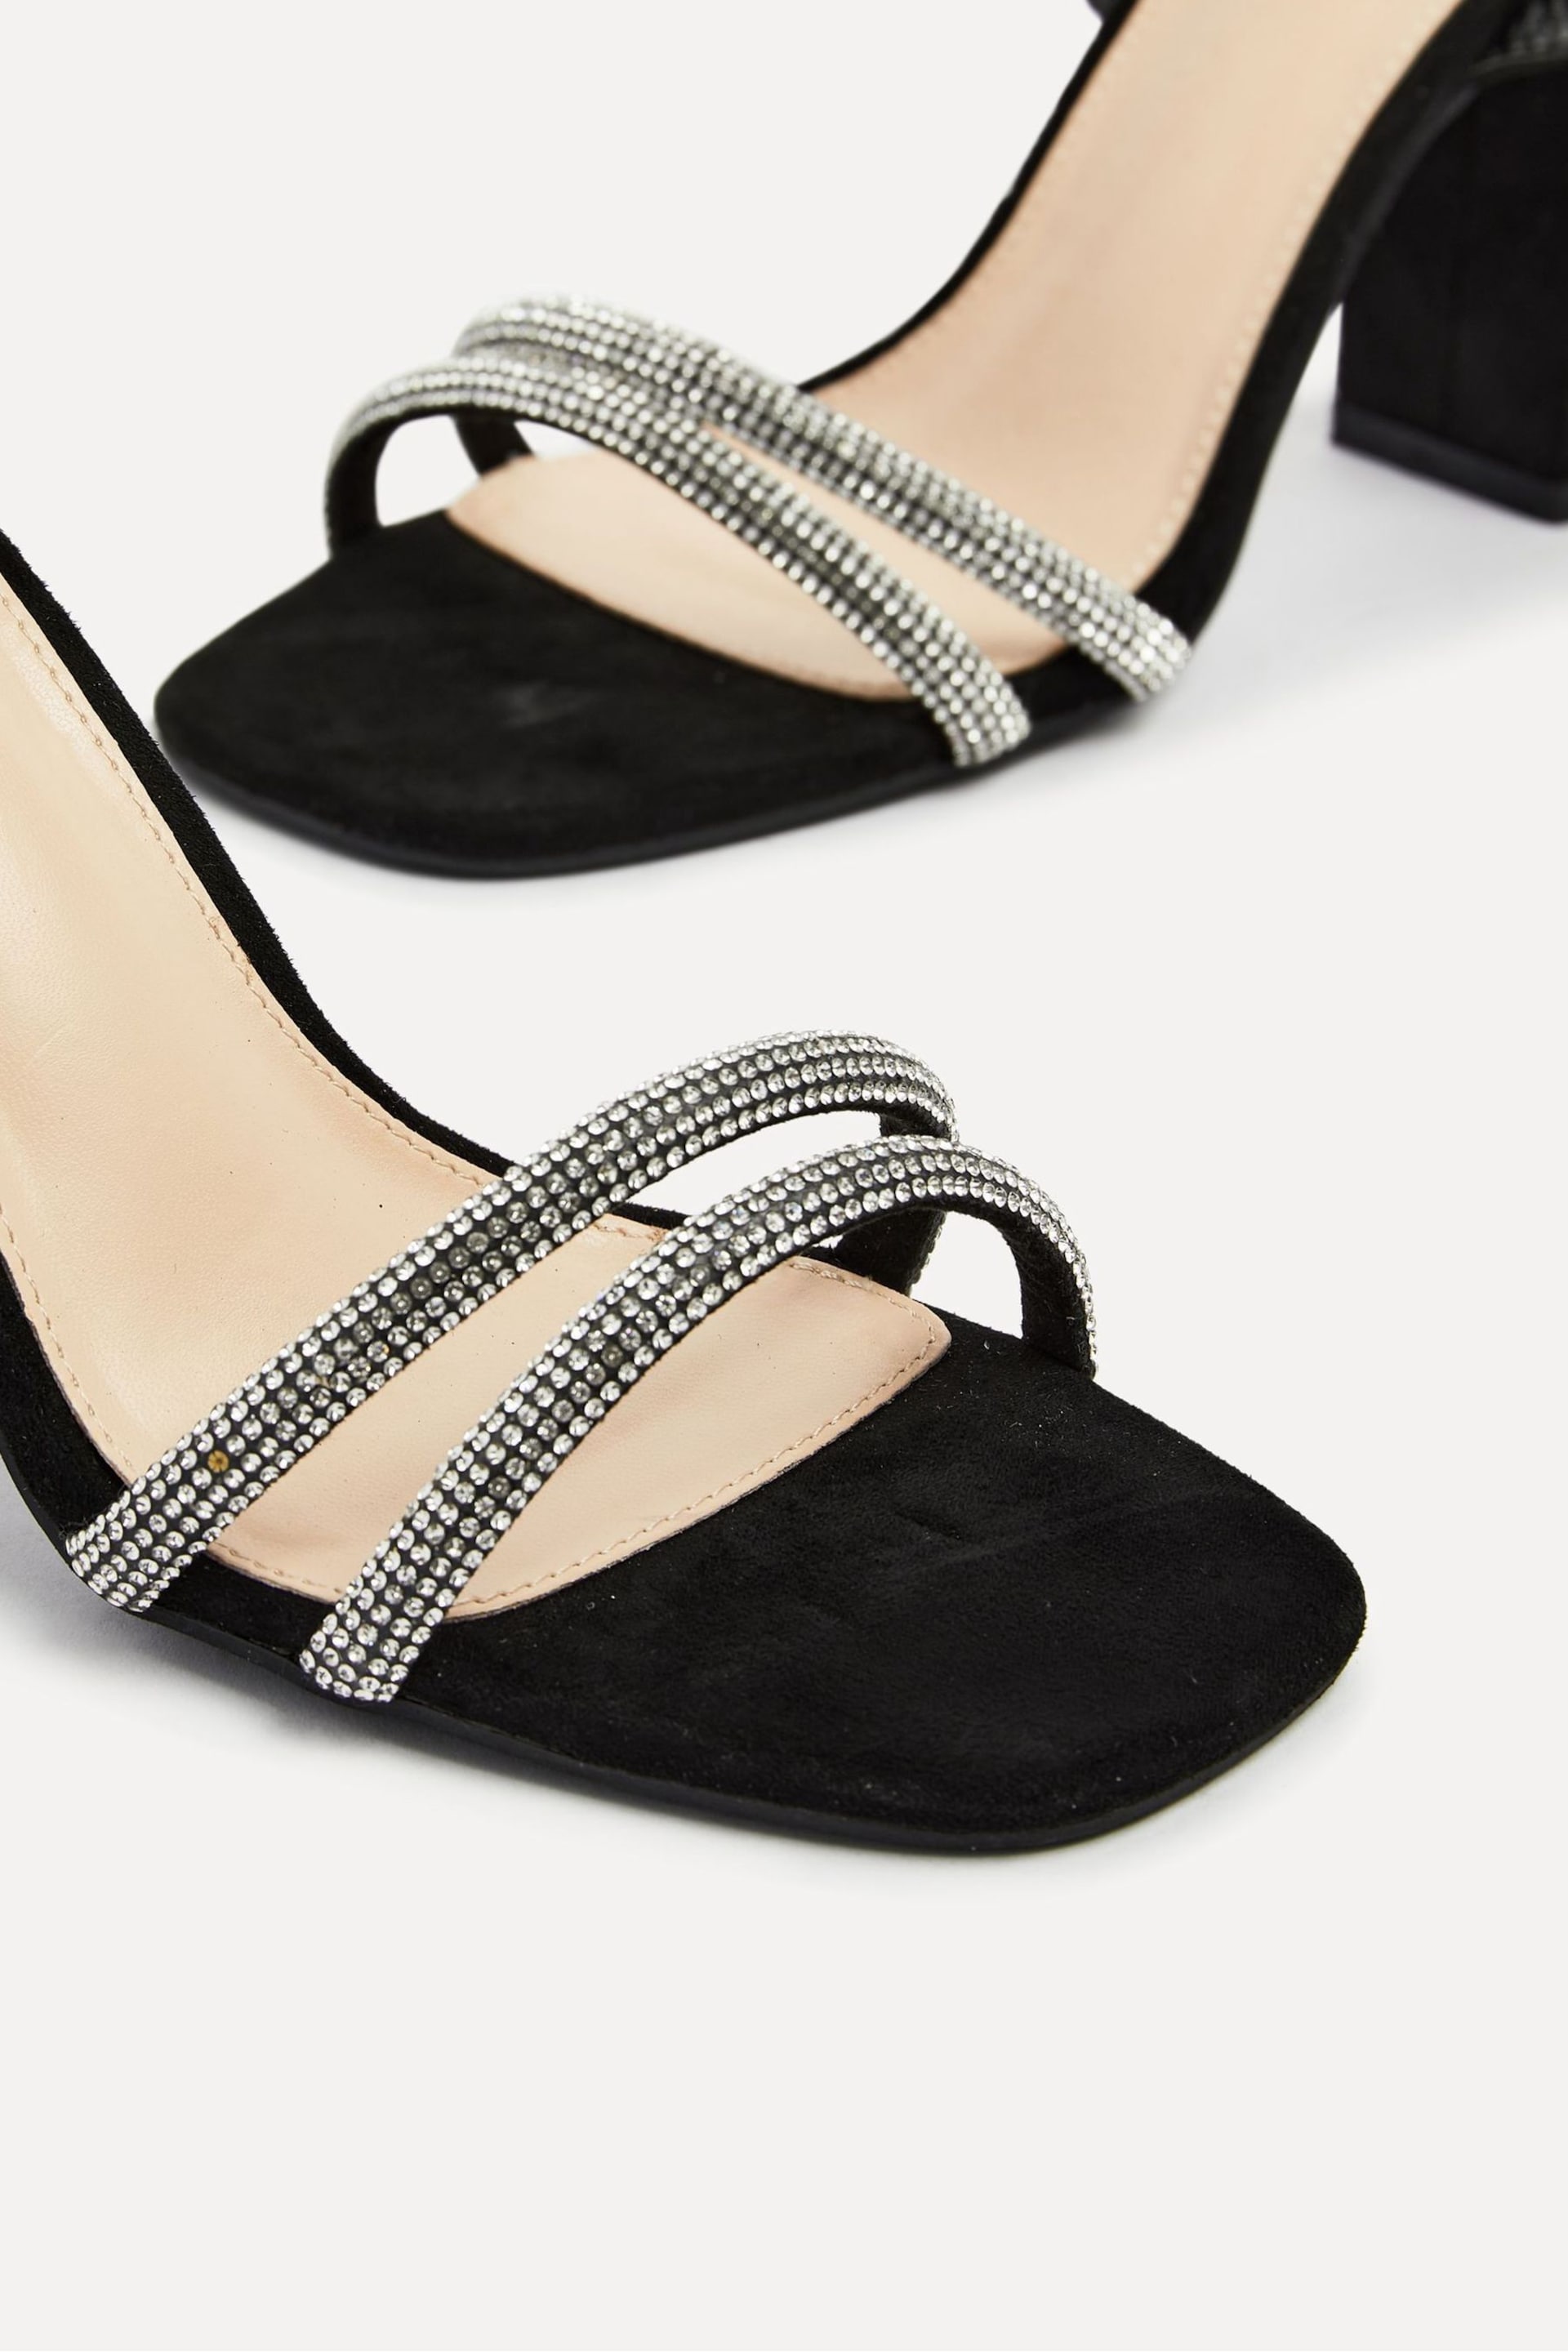 Linzi Black Imera Block Heeled Sandals With Diamante Front Strap - Image 5 of 6